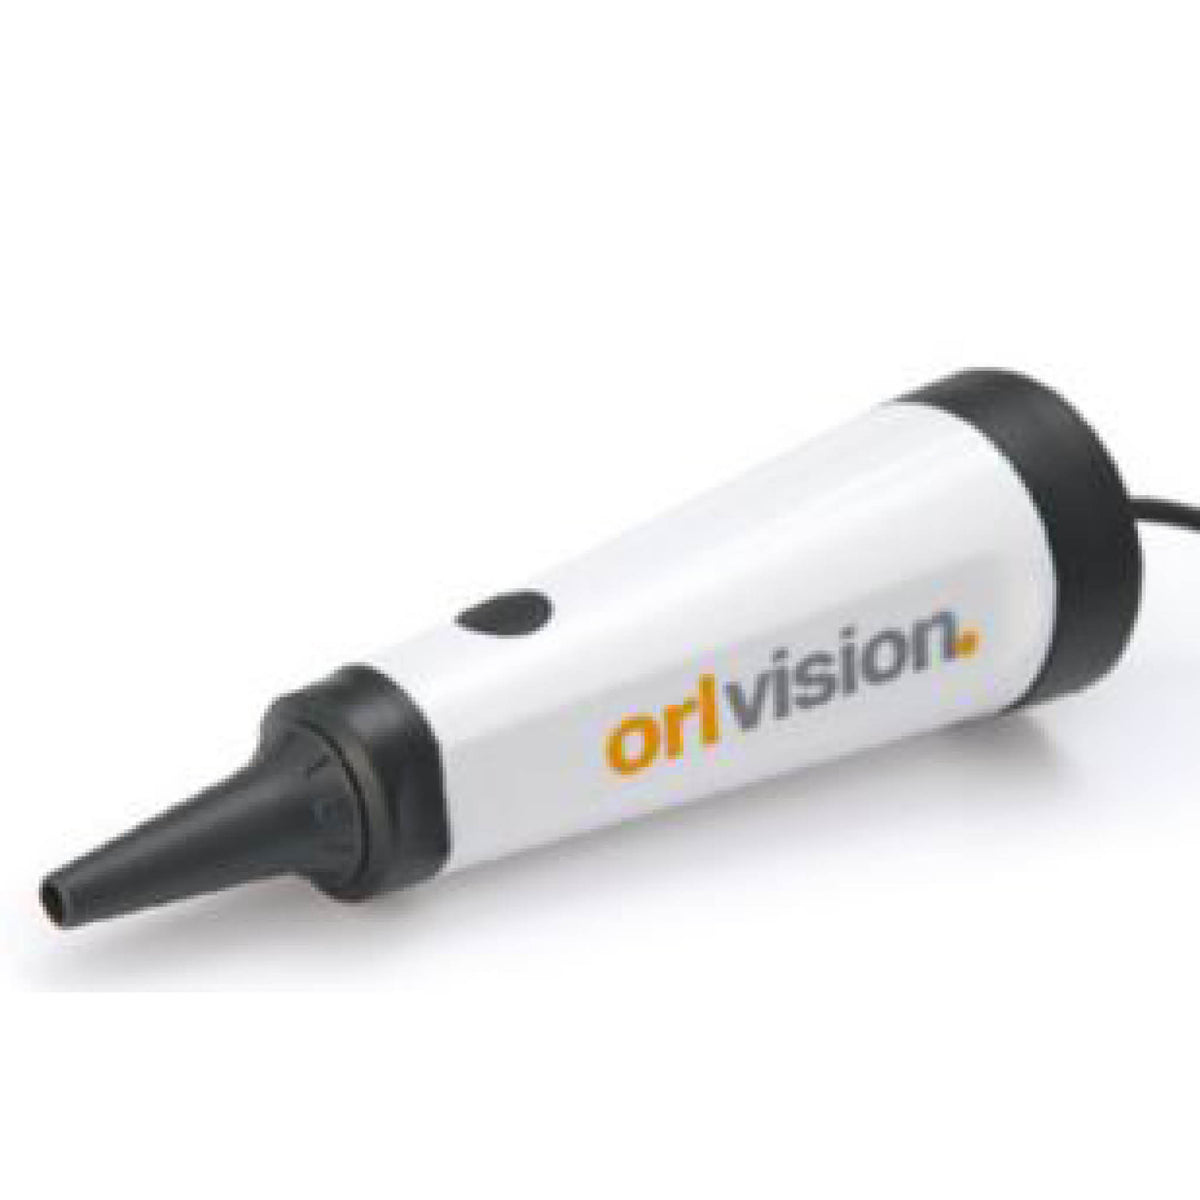 Orlvision Video Otoscope OX2